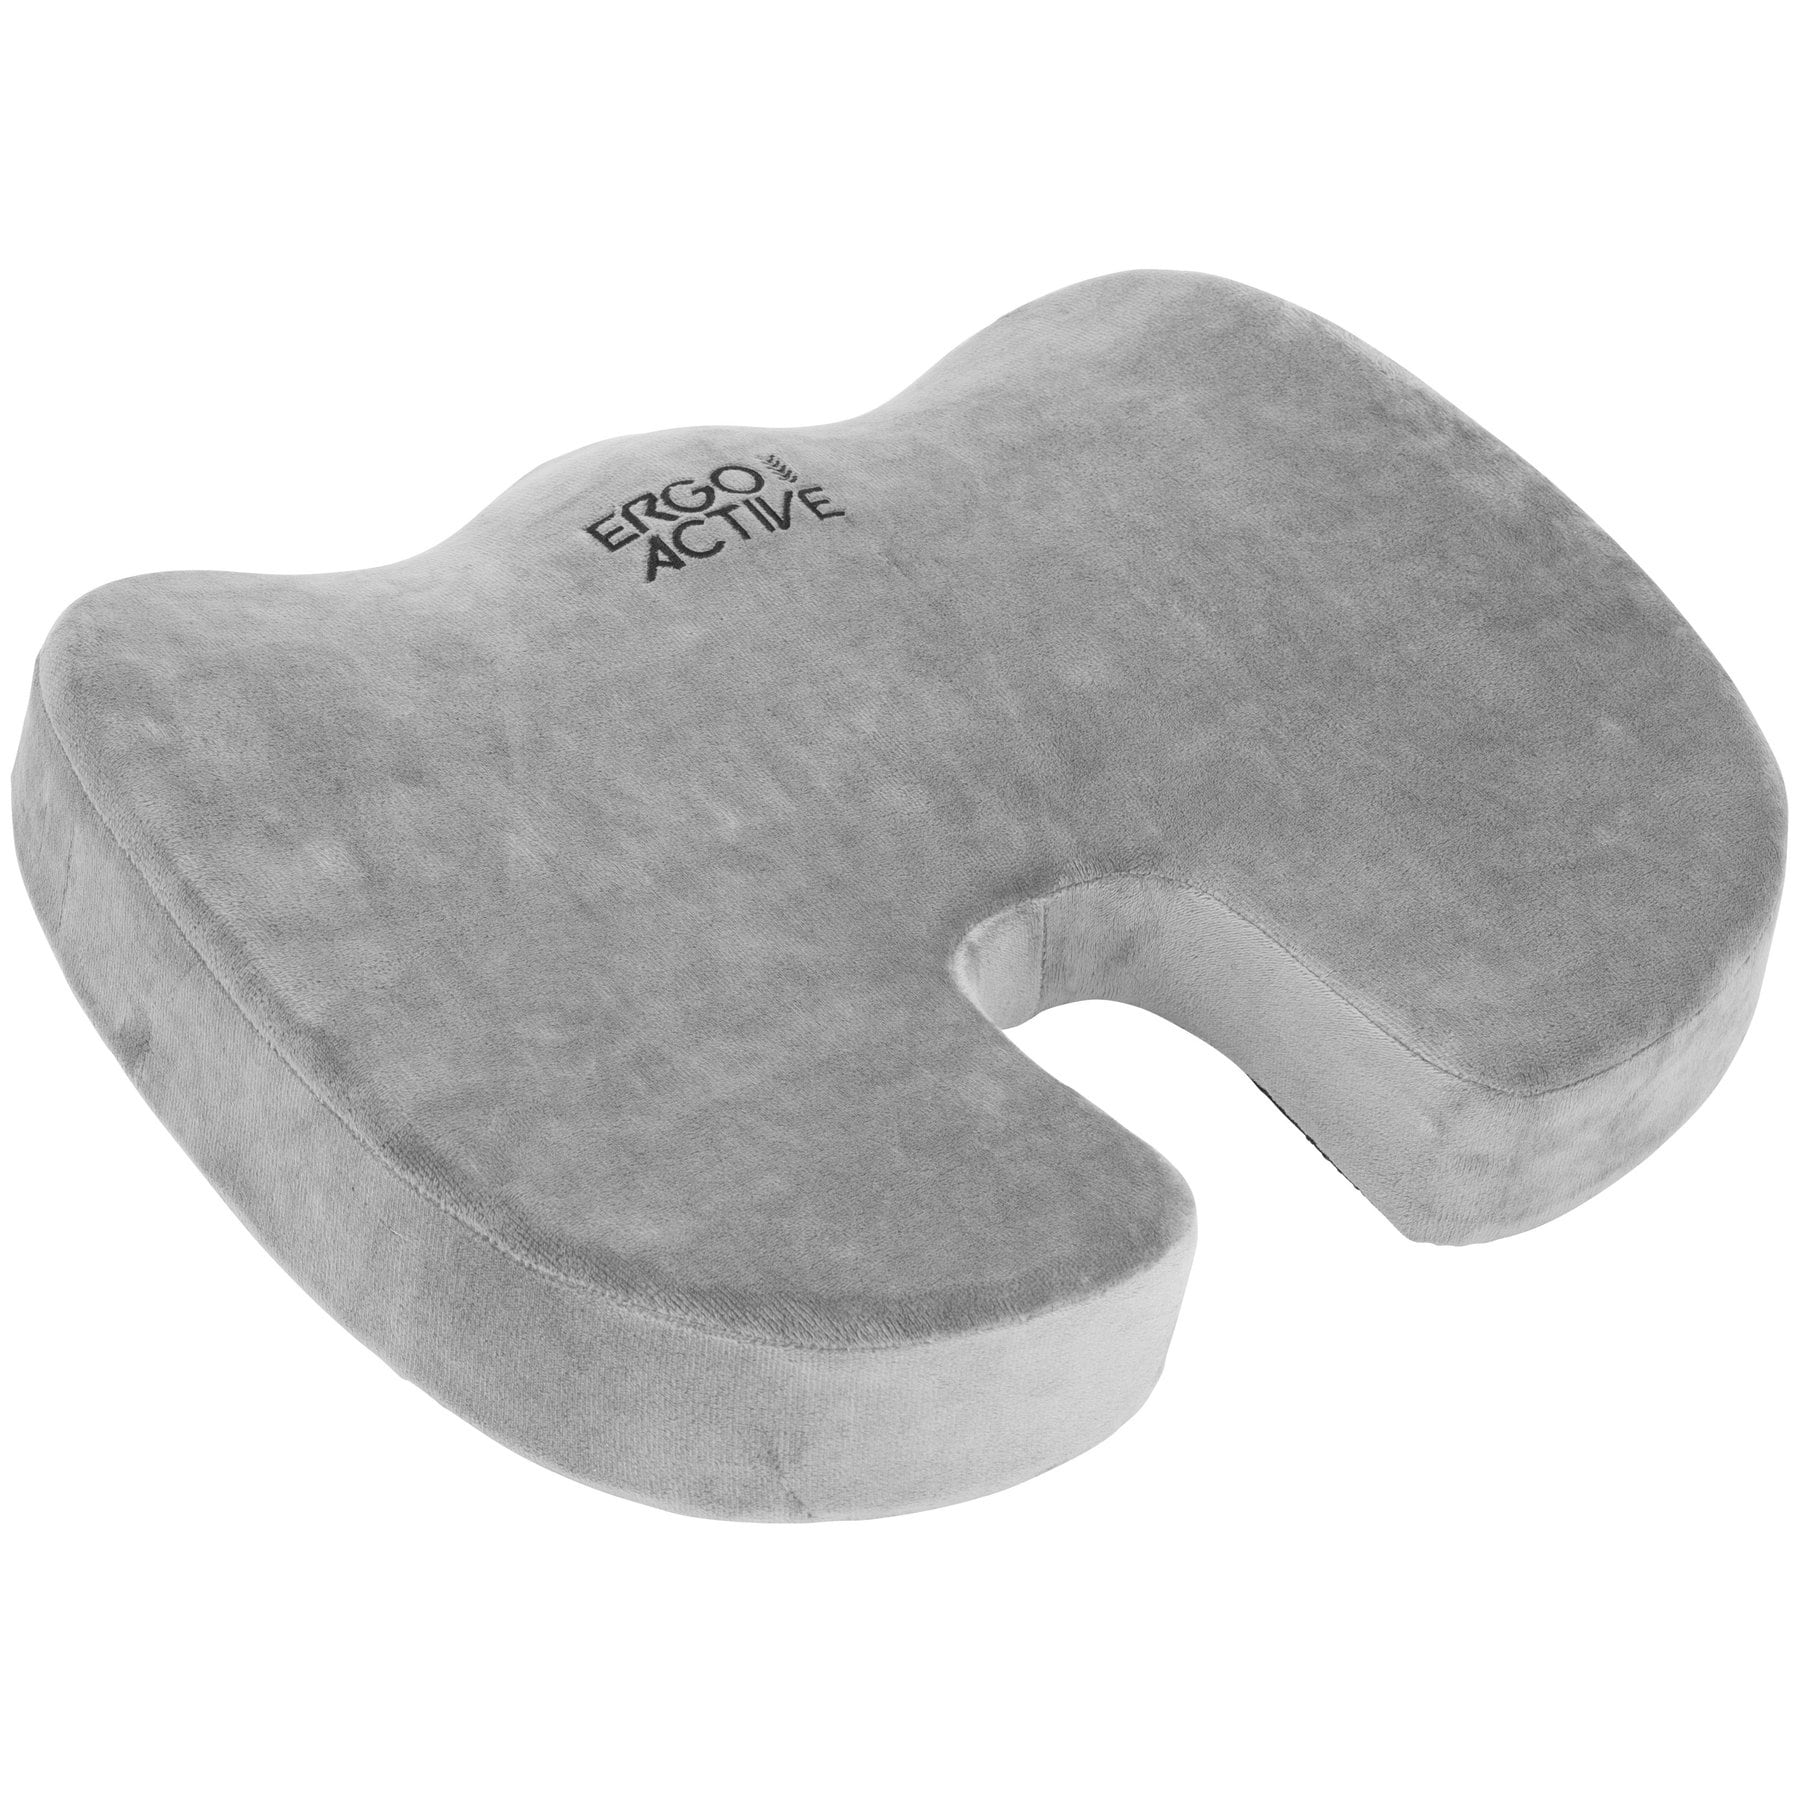 MODVEL Gel Enhanced Seat Cushion  Memory Foam Pillow for Office Chair